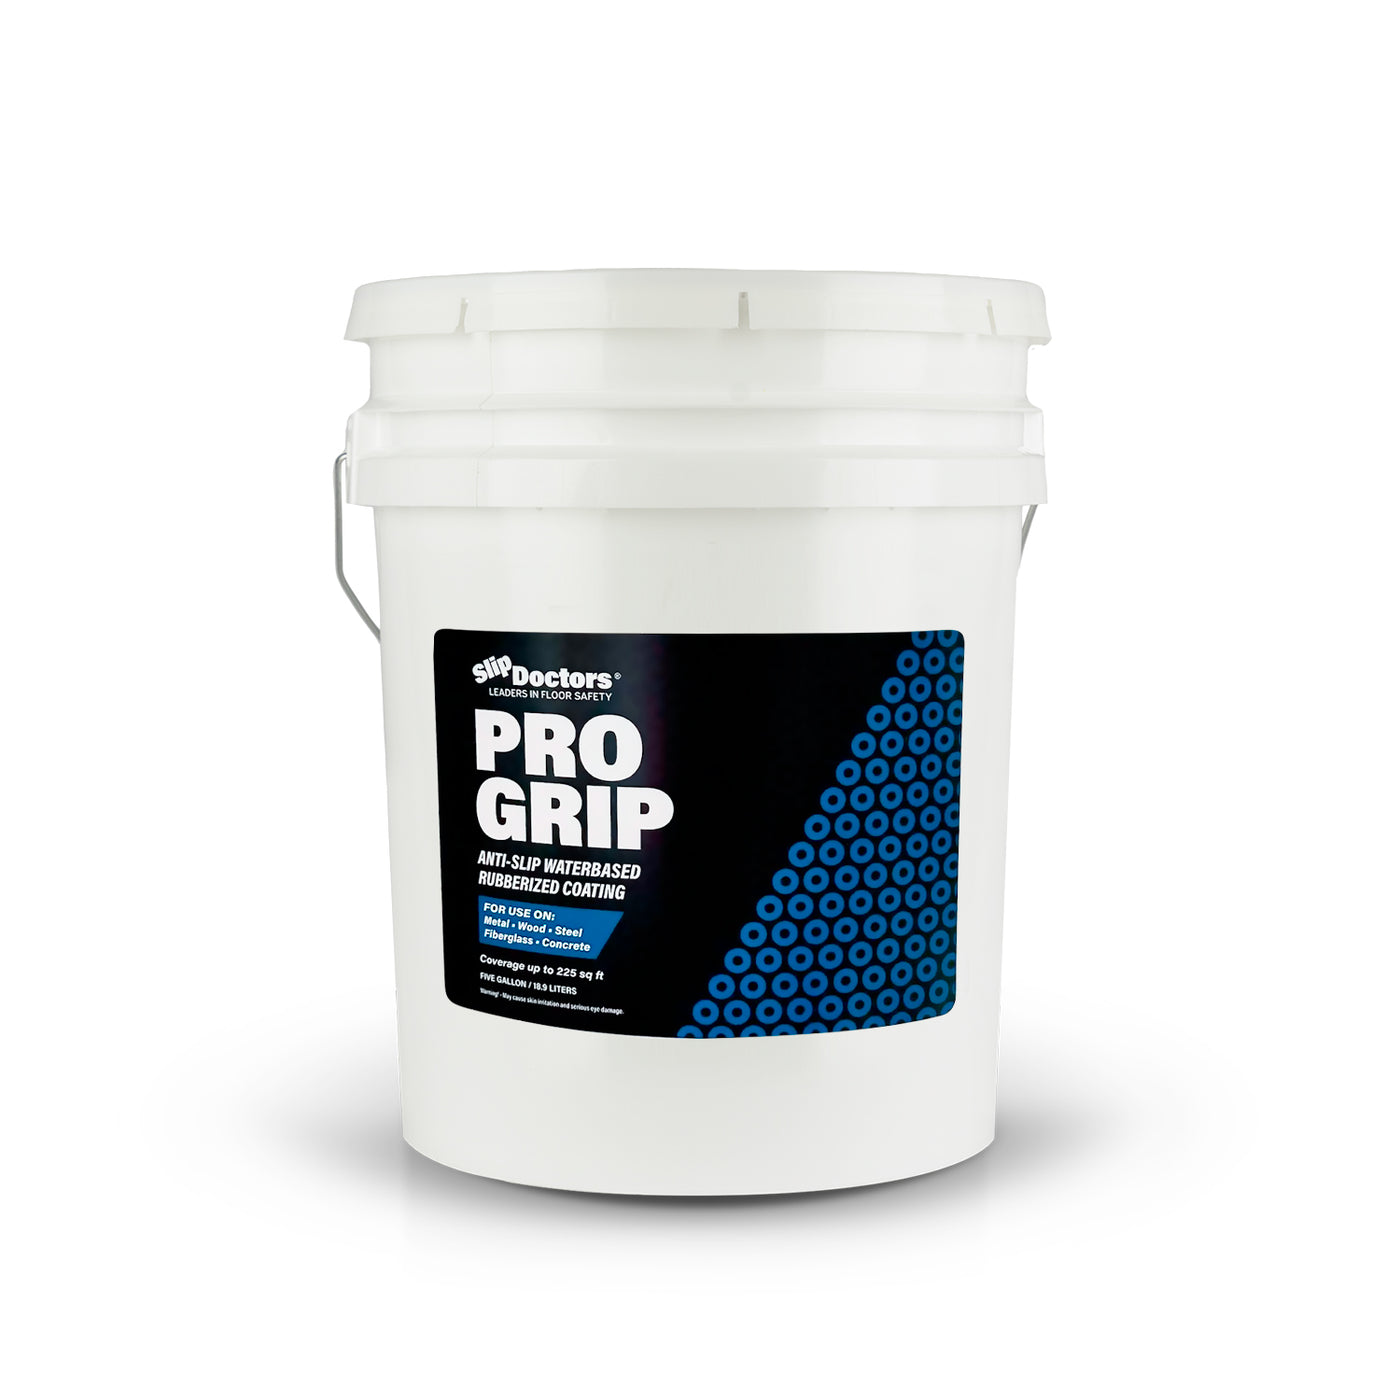 Pro Grip Rubberized Non-Skid Spray Coating for Decks, Floors & Boats - 5 Gallon, White, Size: 5-Gallon